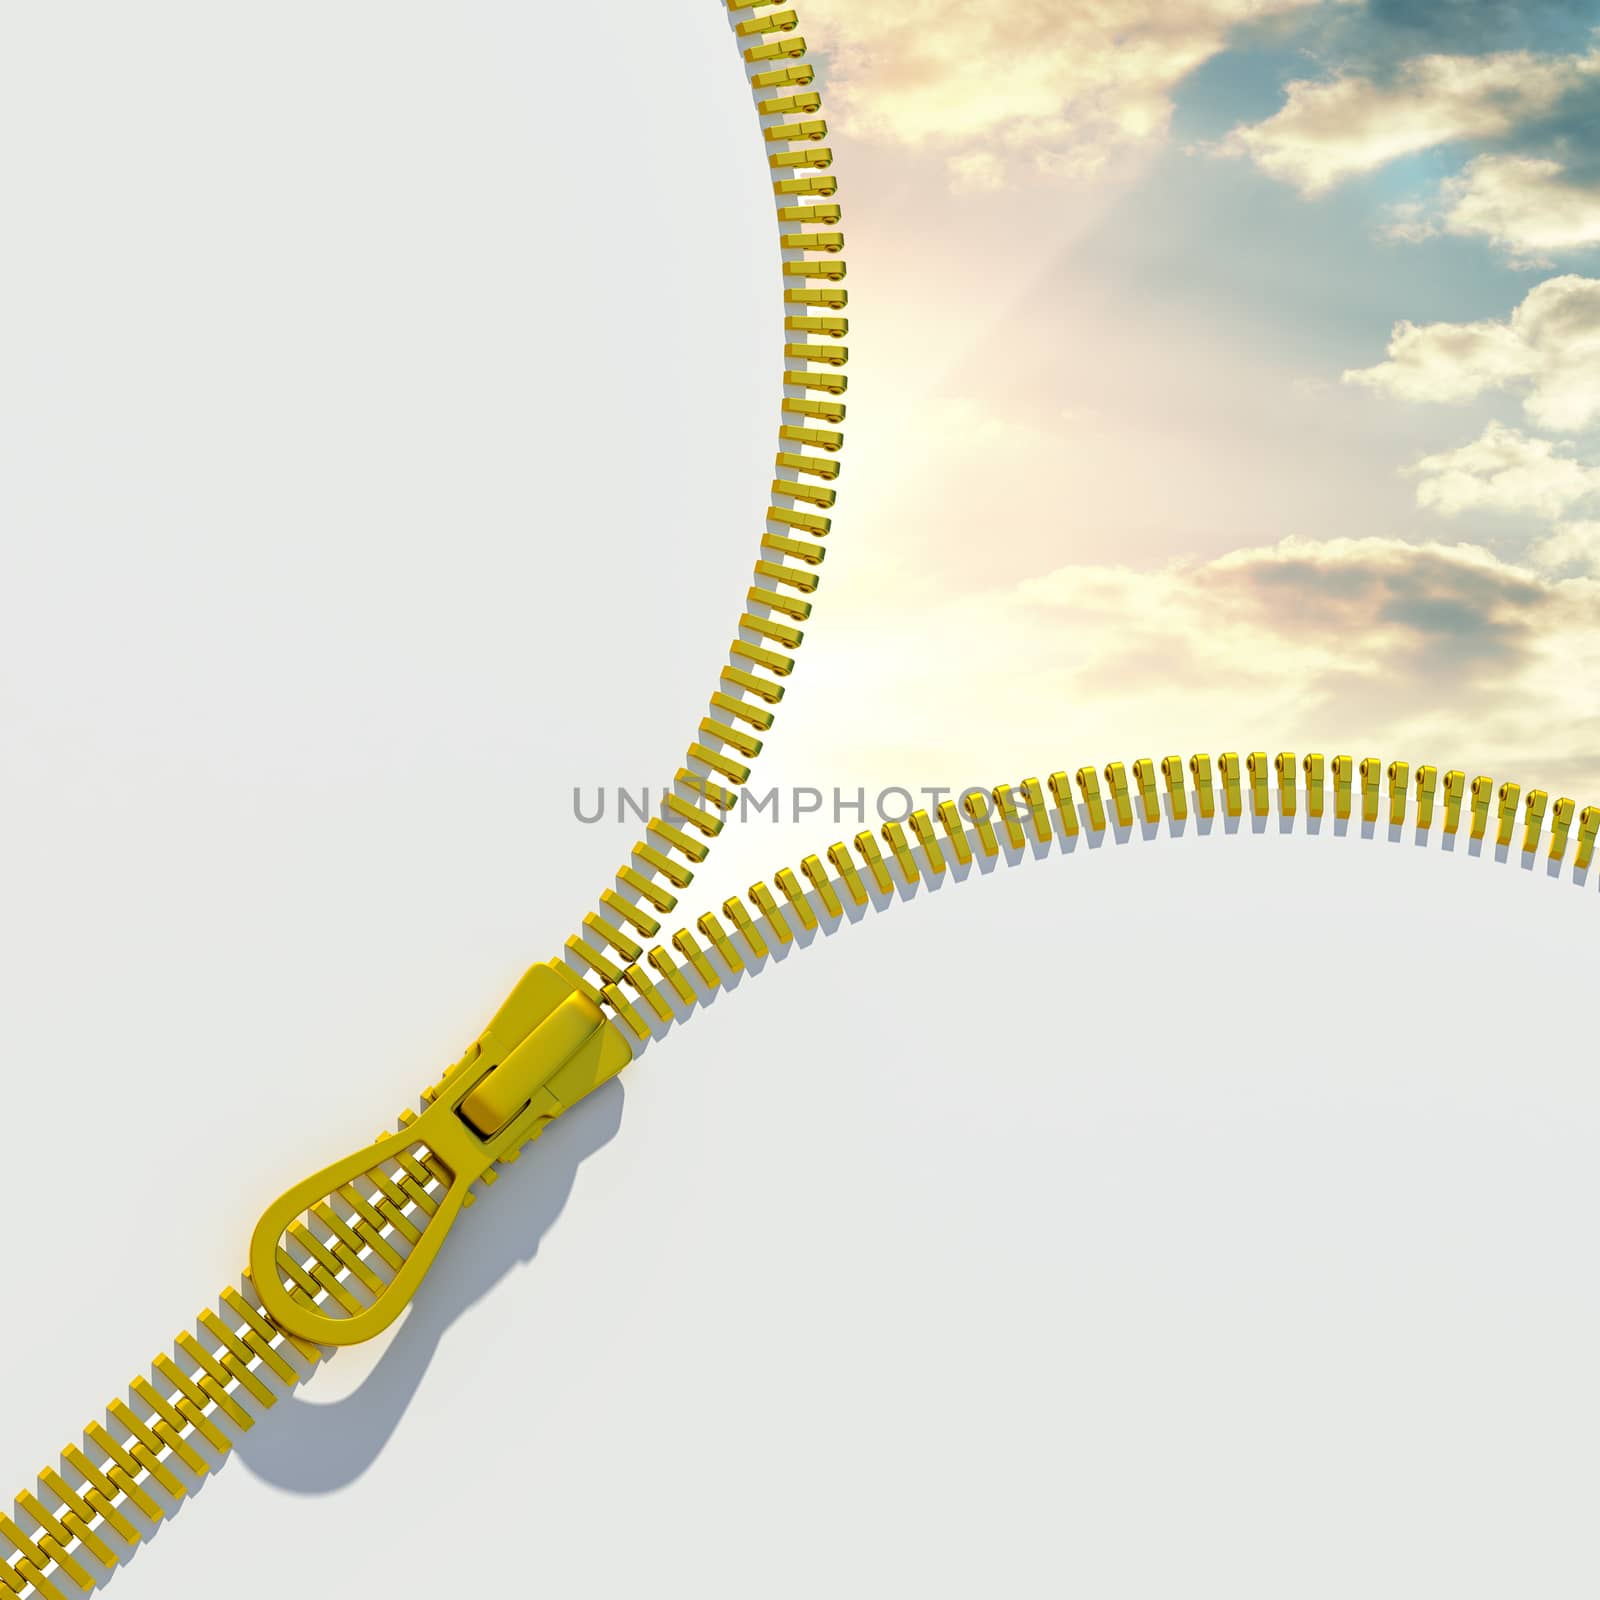 Opened zipper revealing a sky background. 3d illustration